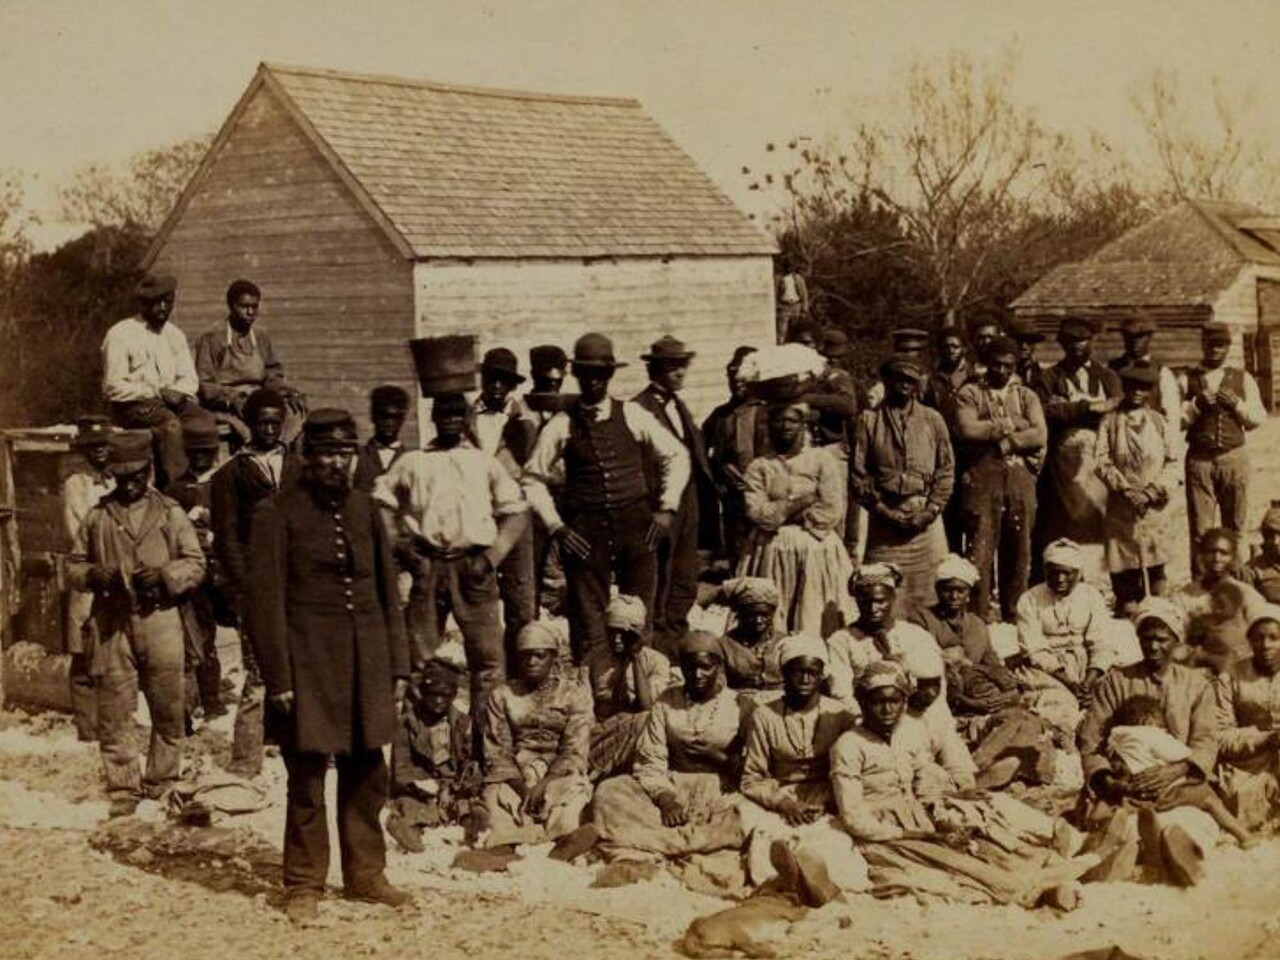 Photograph of emancipated people